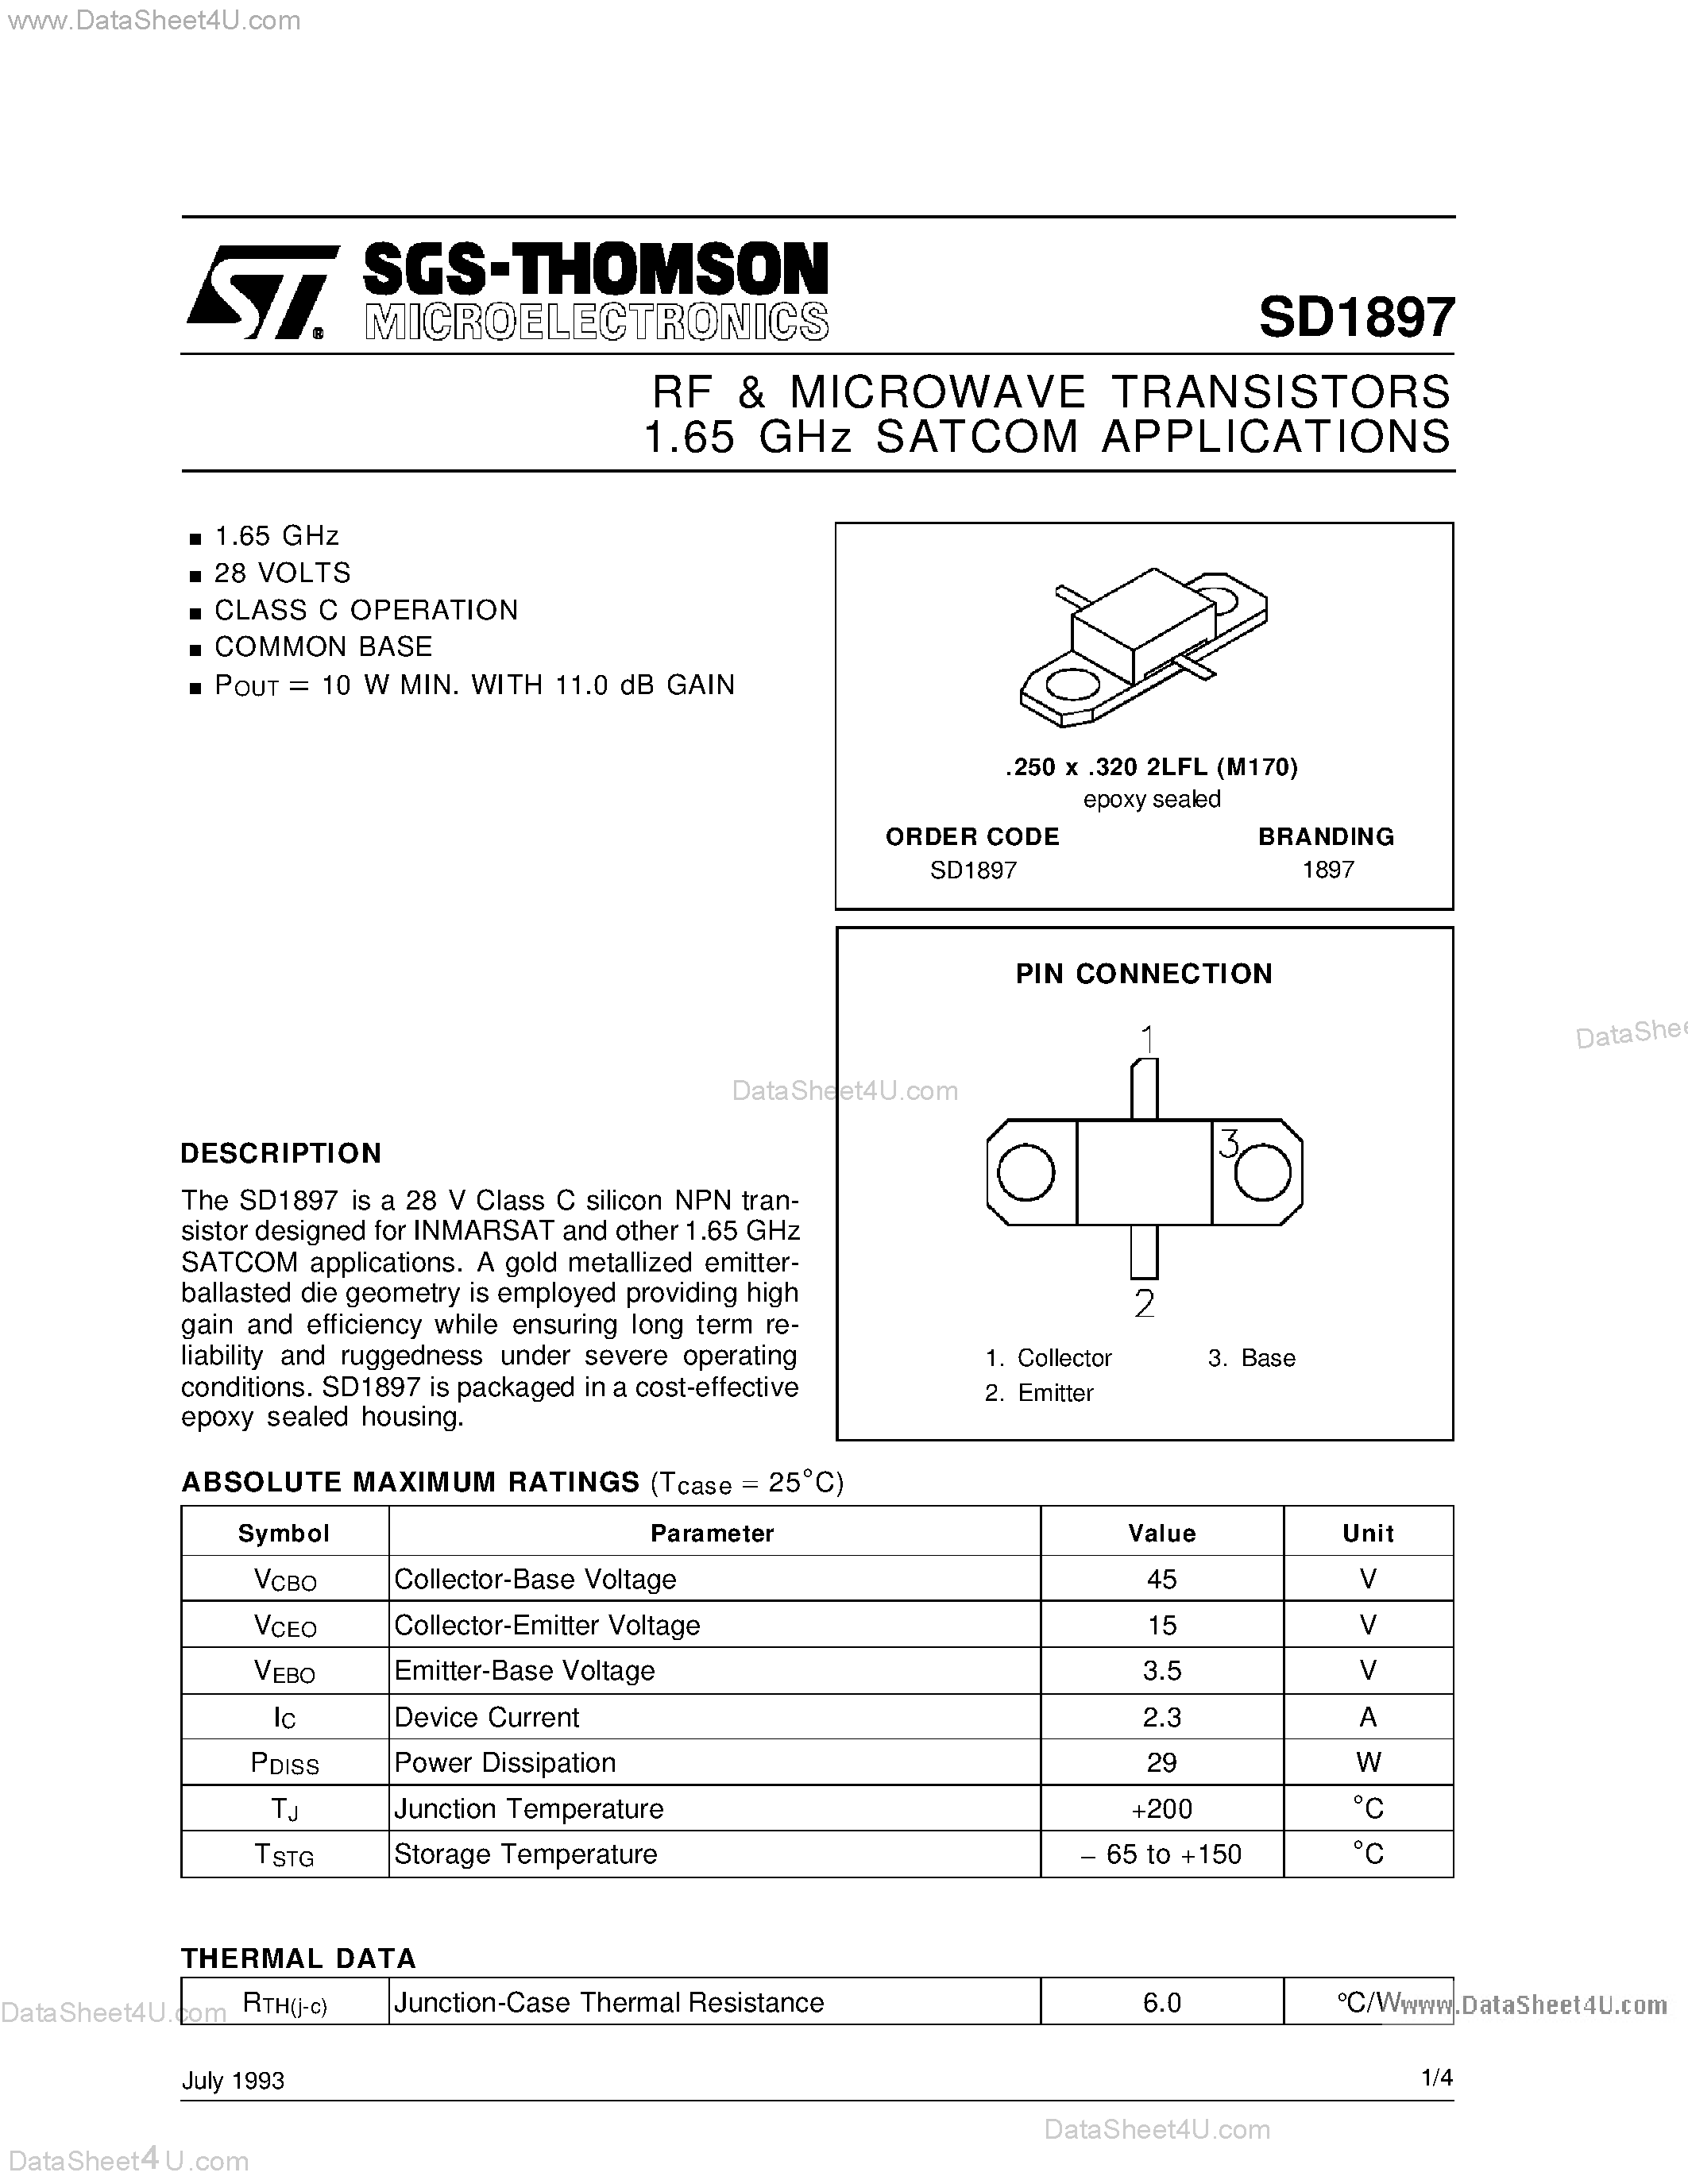 Даташит SD1897 - RF & MICROWAVE TRANSISTORS 1.65 GHz SATCOM APPLICATIONS страница 1